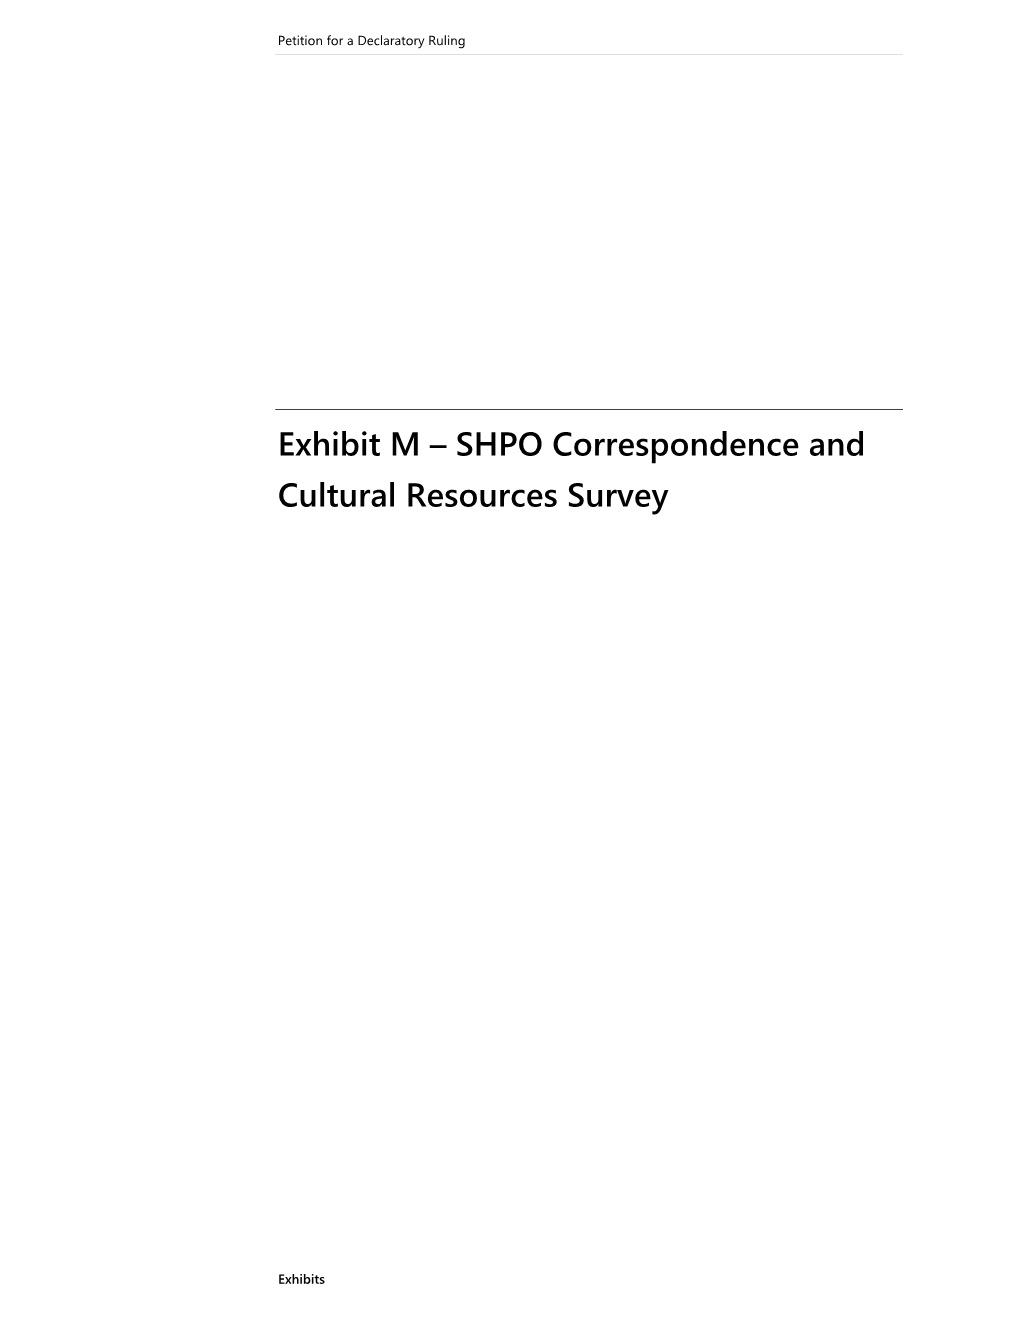 Exhibit M – SHPO Correspondence and Cultural Resources Survey